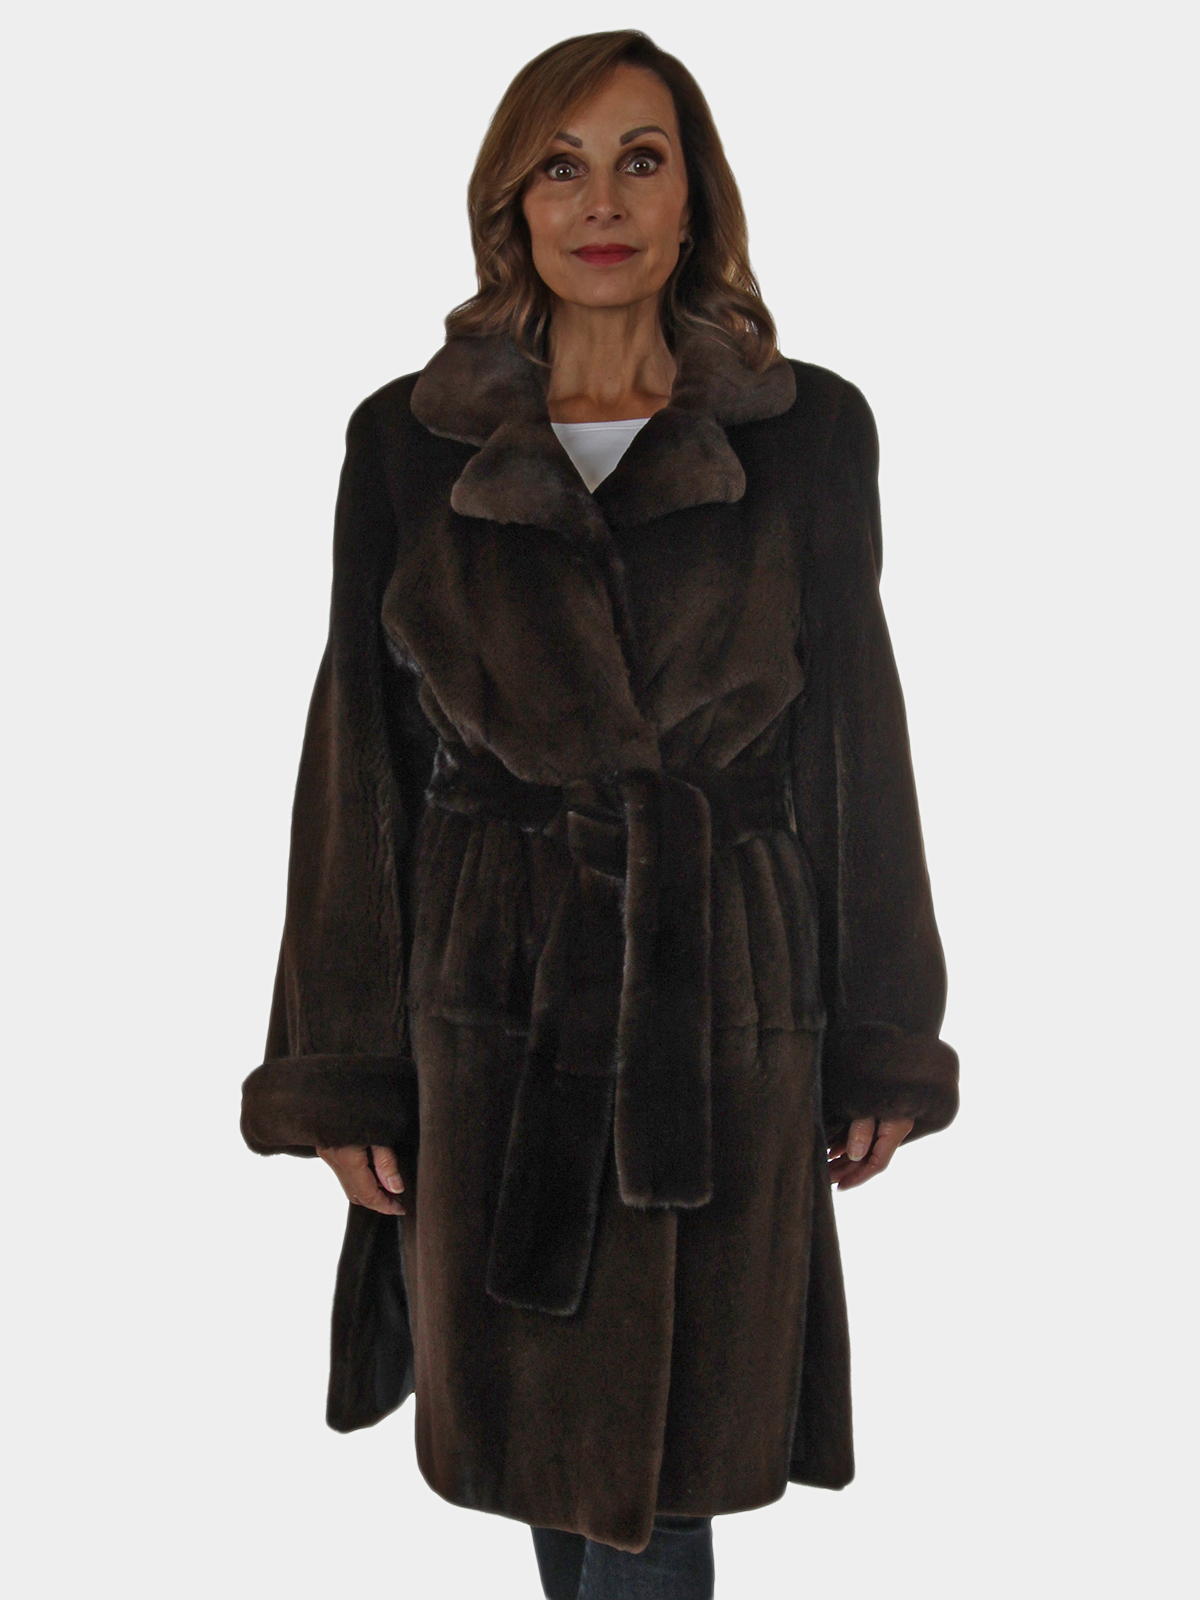 Woman's Chocolate Brown Semi-Sheared Mink Fur 7/8 Coat with Belt